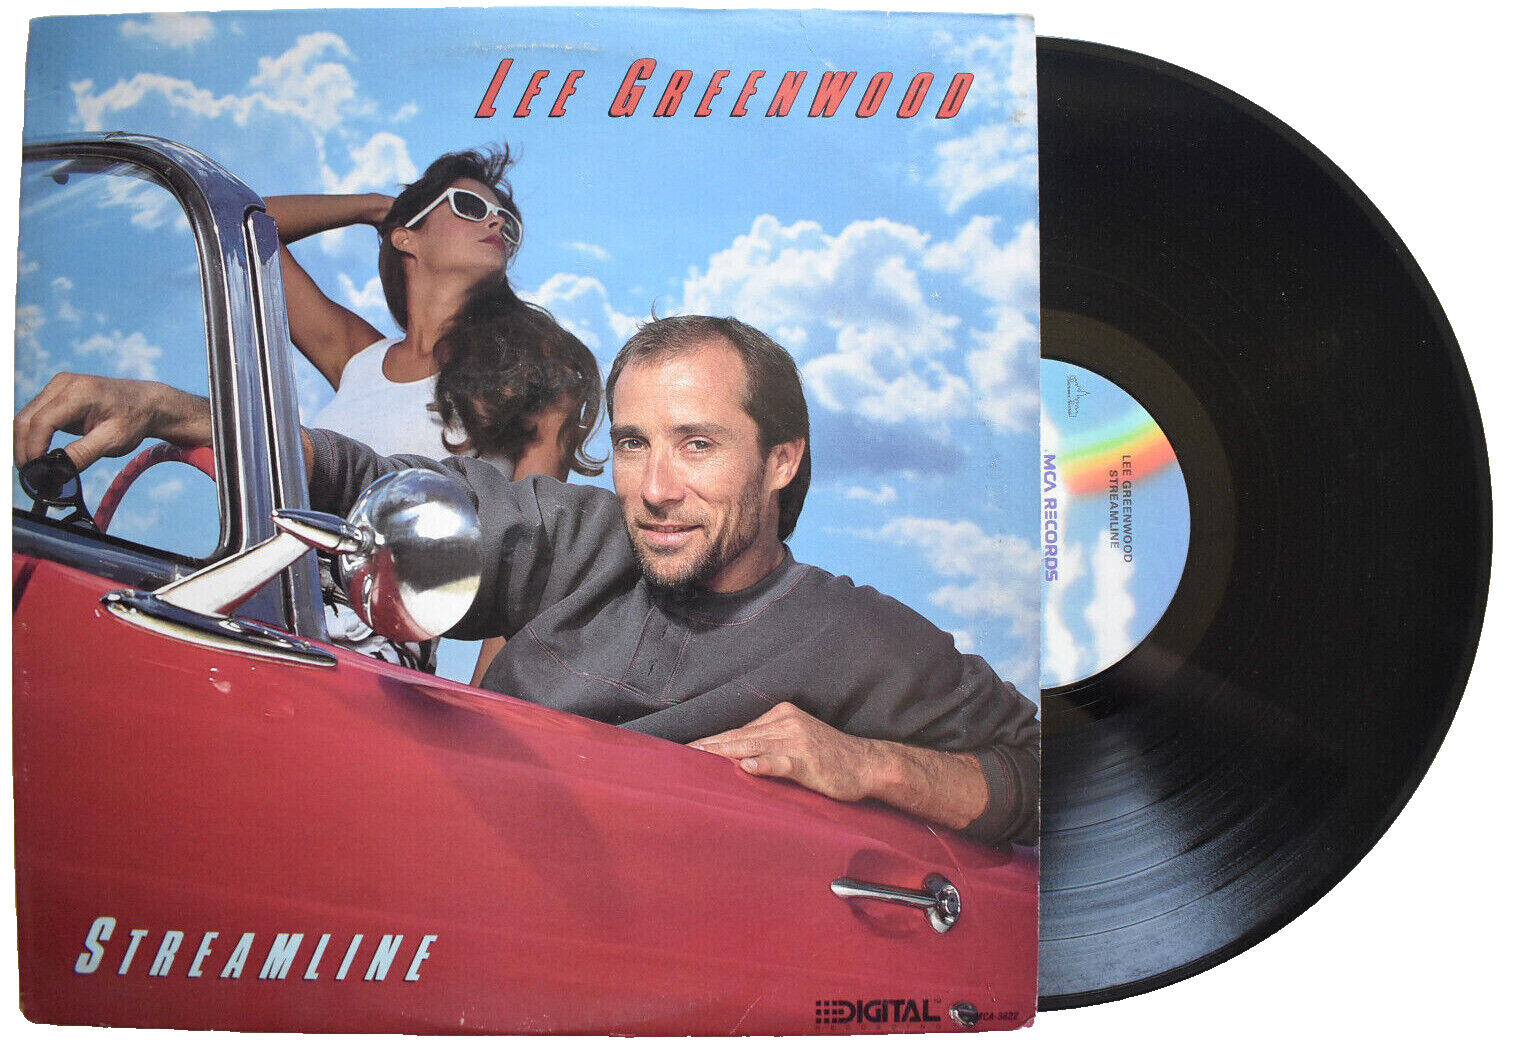 LEE GREENWOOD STREAMLINE VINYL LP RECORD MCA 5622 POP COUNTRY 1985-